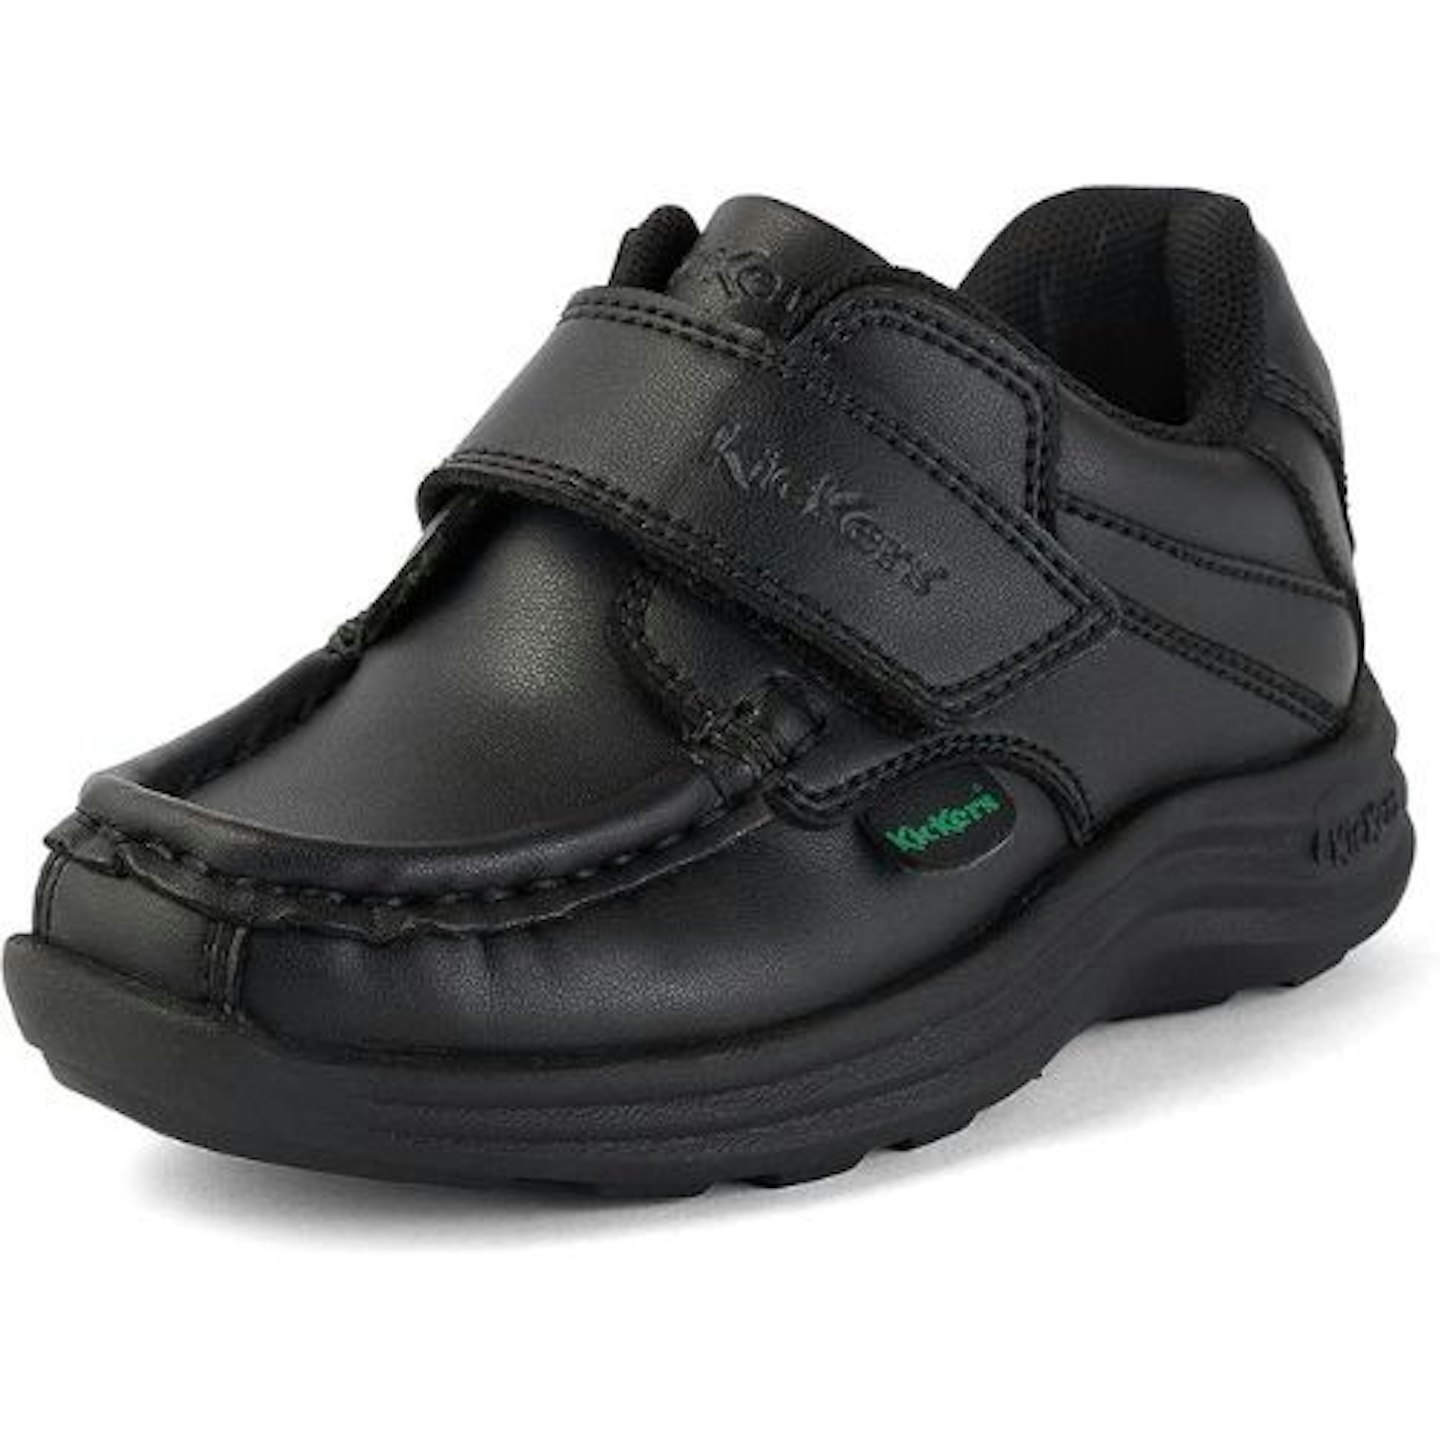  Best vegan school shoes Kickers Infant Reasan Strap Vegan Shoes